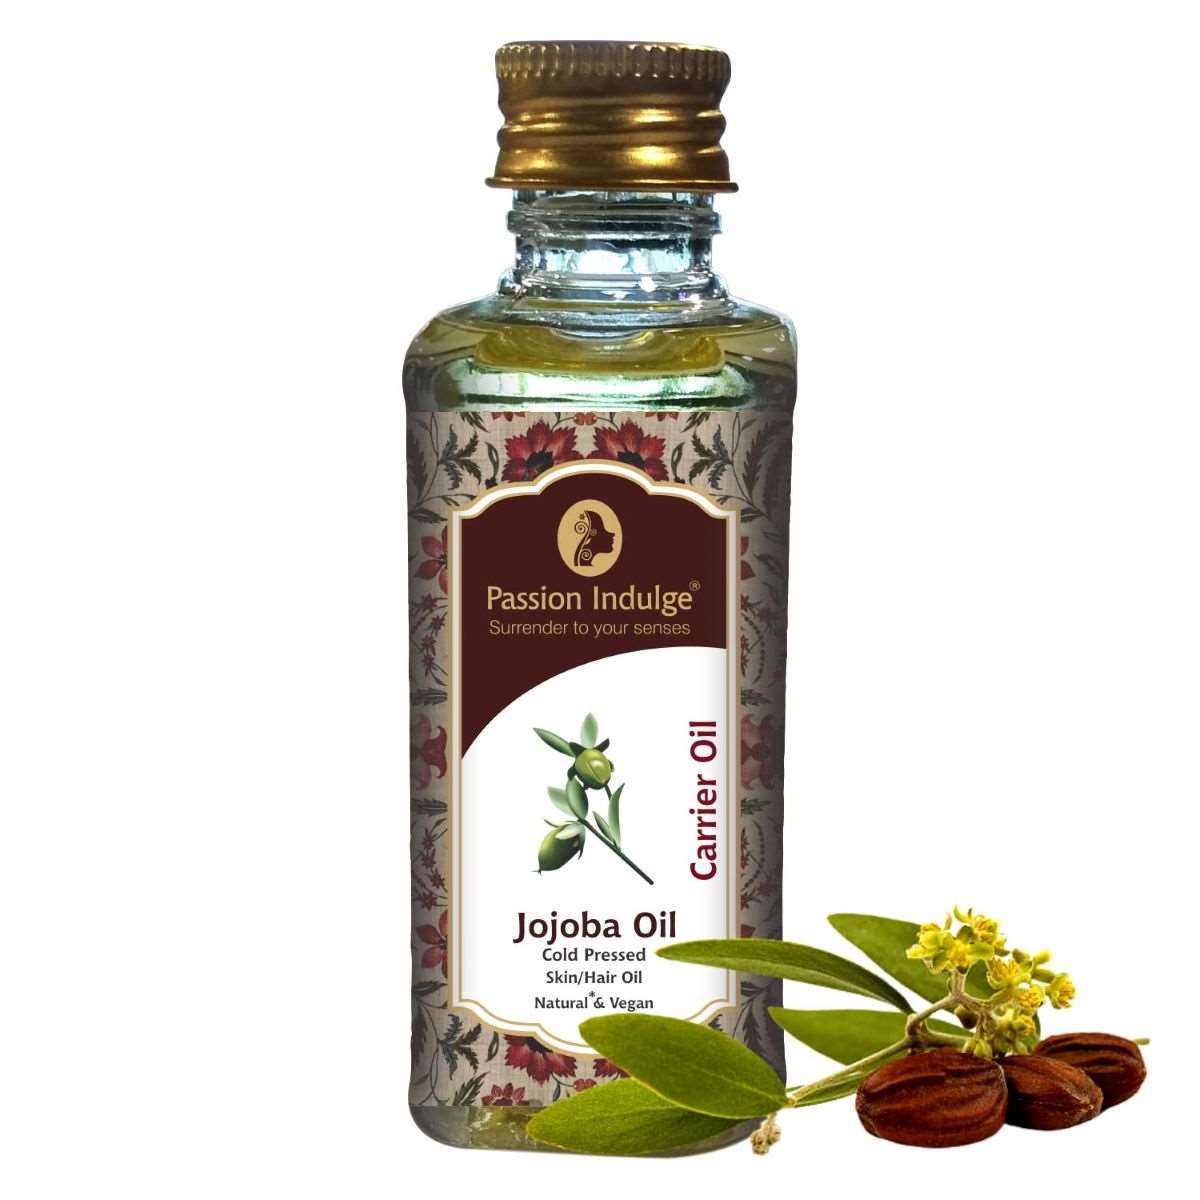 Jojoba Carrier Oil 60ml for Hair Growth | Reduces Hair Loss | Dandruff and Scalp Disorders | Help Prevent Hair Thinning | Natural & Vegan